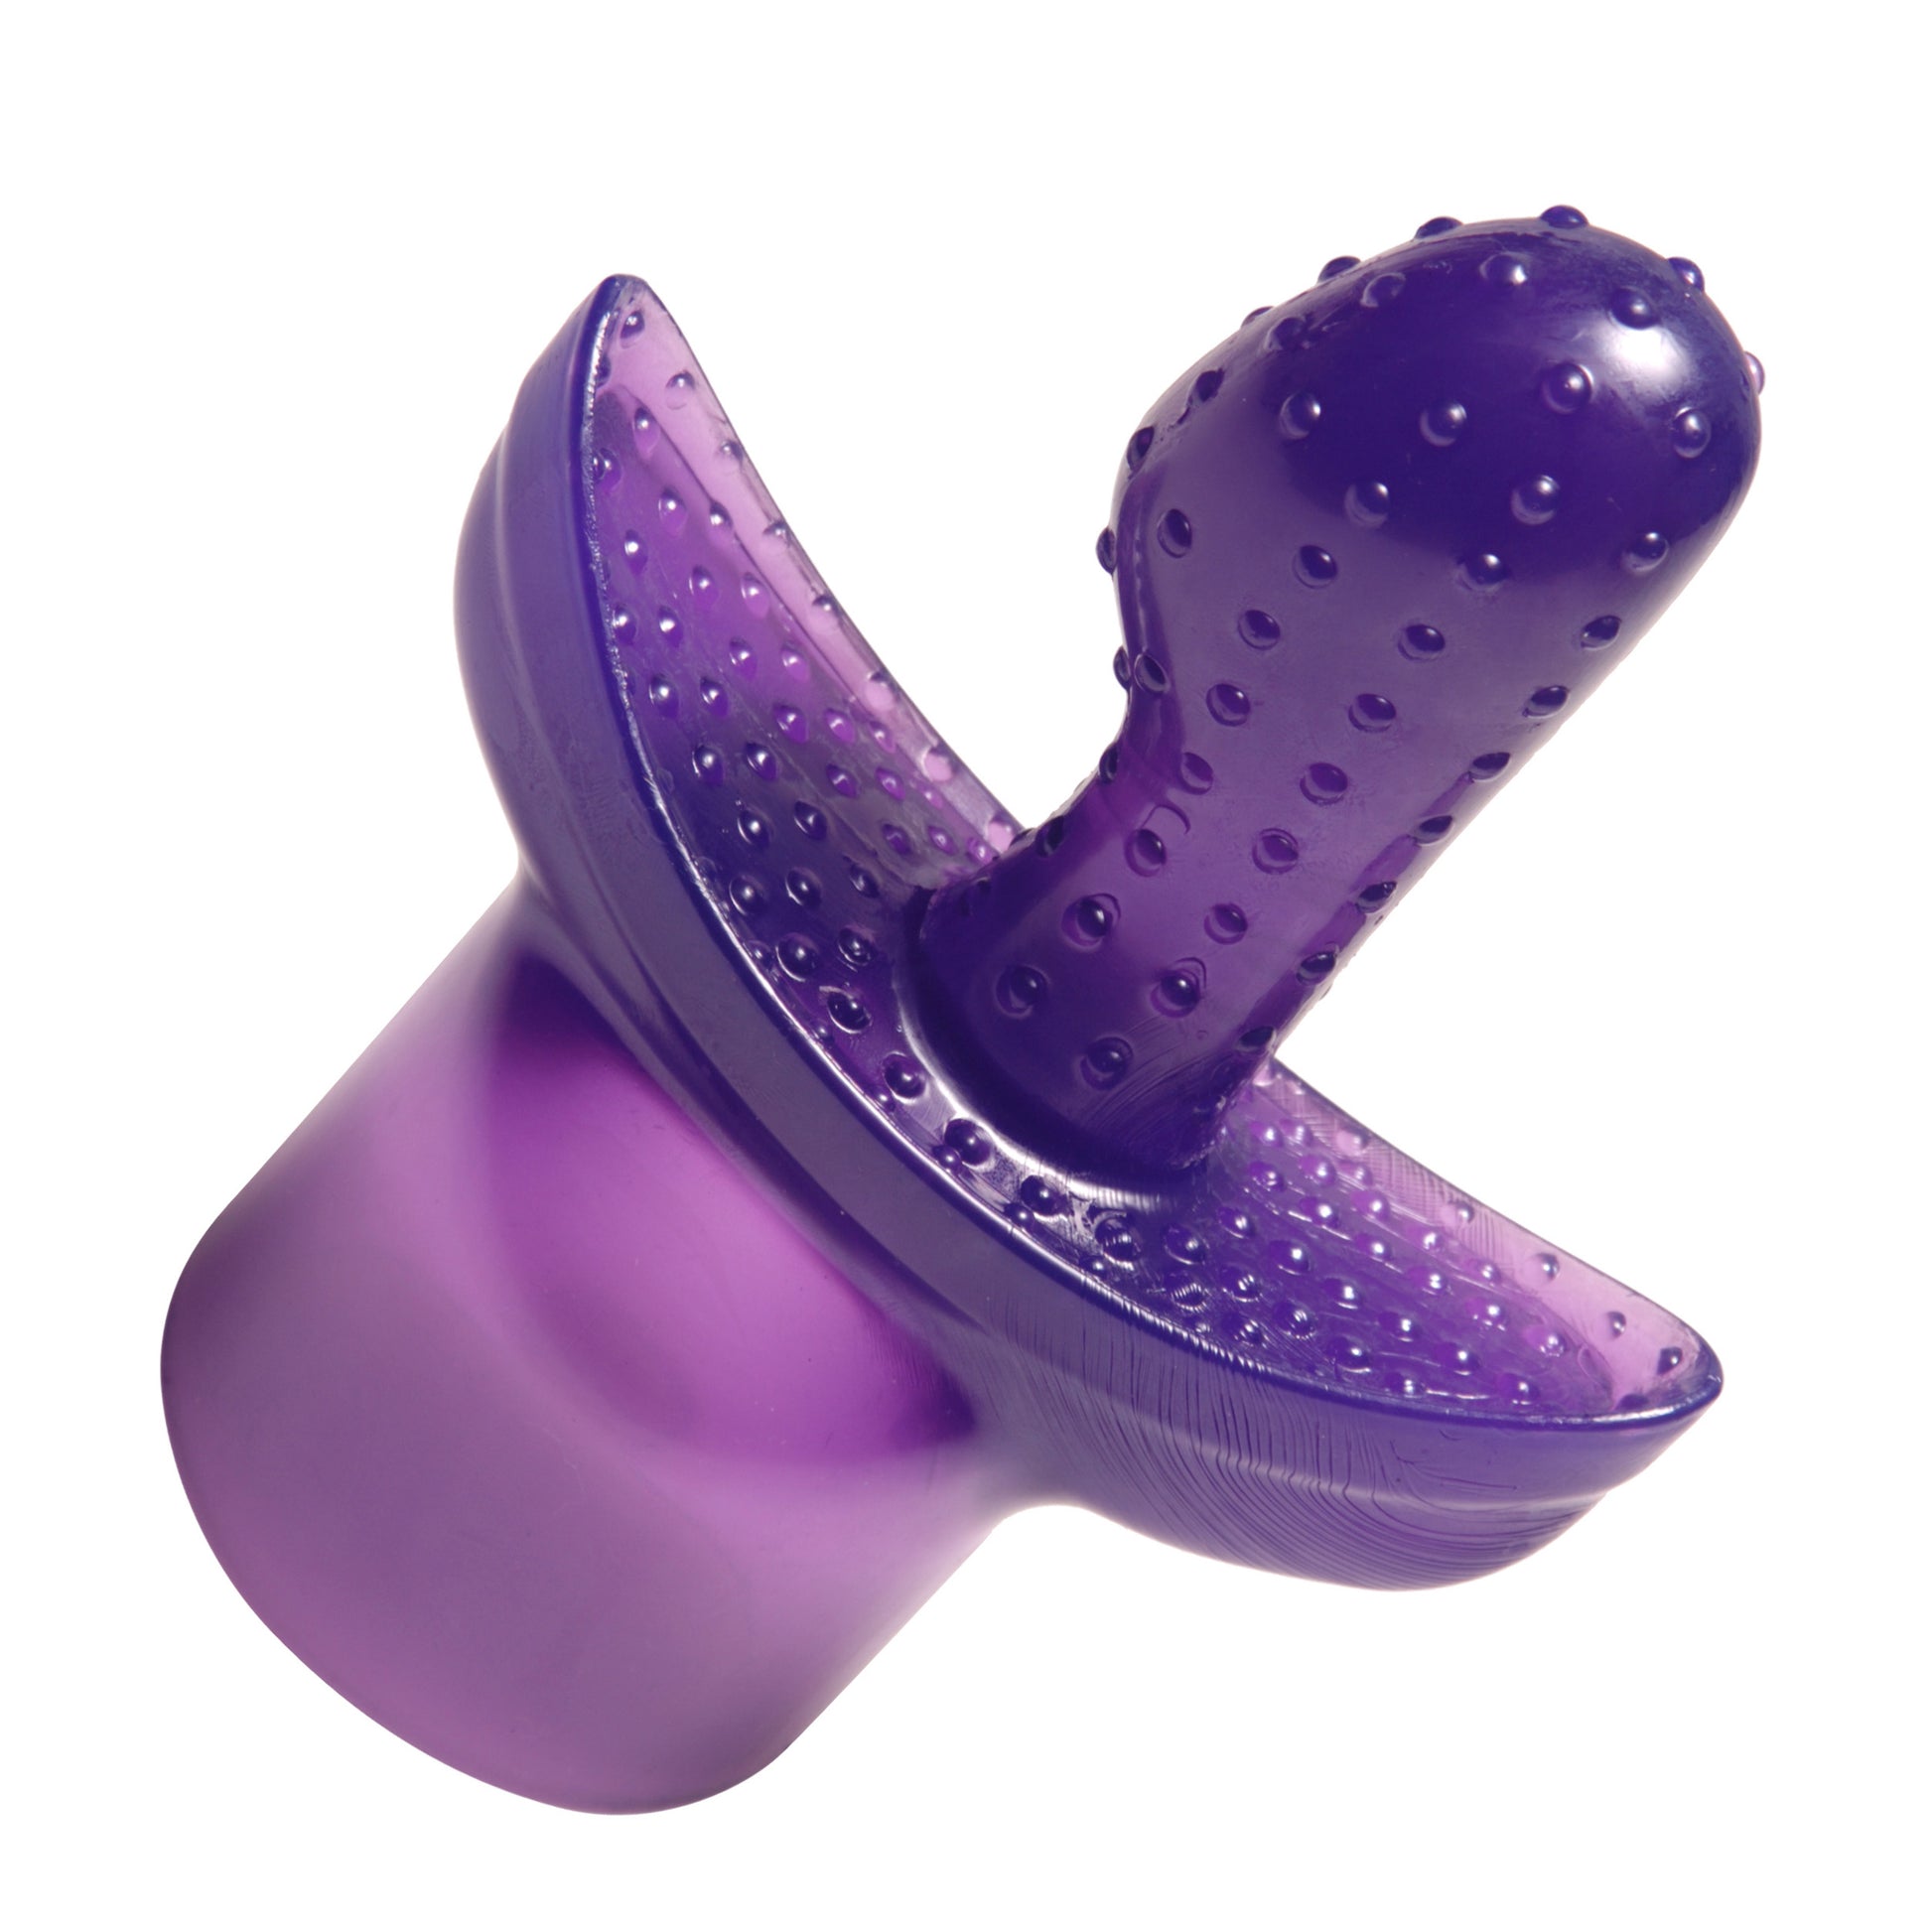 Turbo Purple Pleasure Wand Kit with Free Attachment - UABDSM